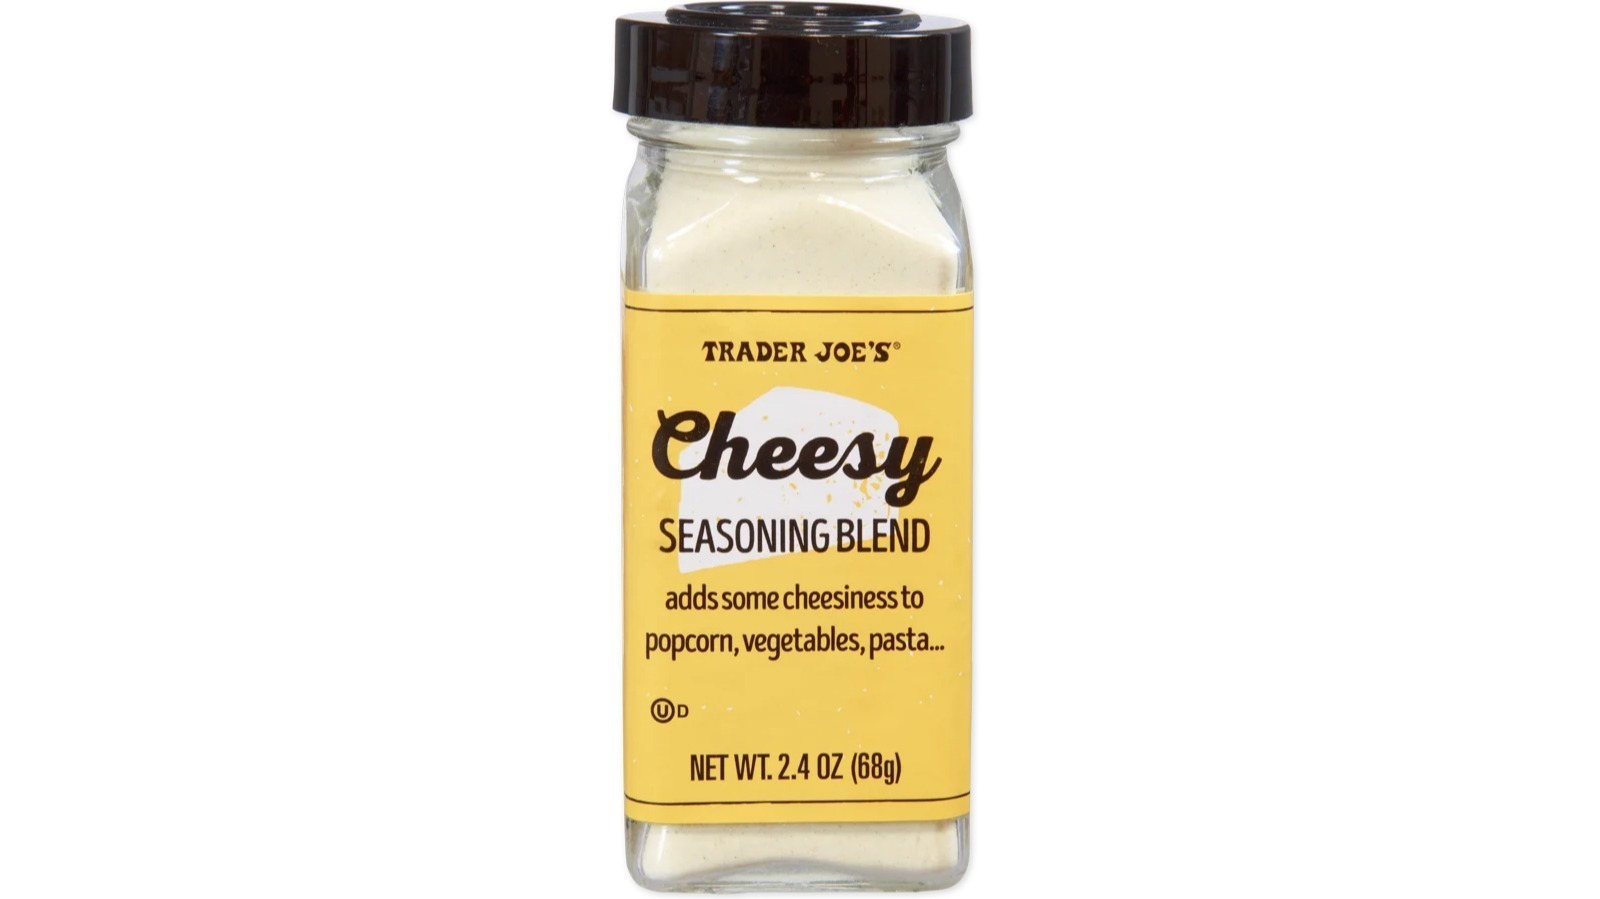 The Best Trader Joe's Salts and Seasonings - The Everygirl